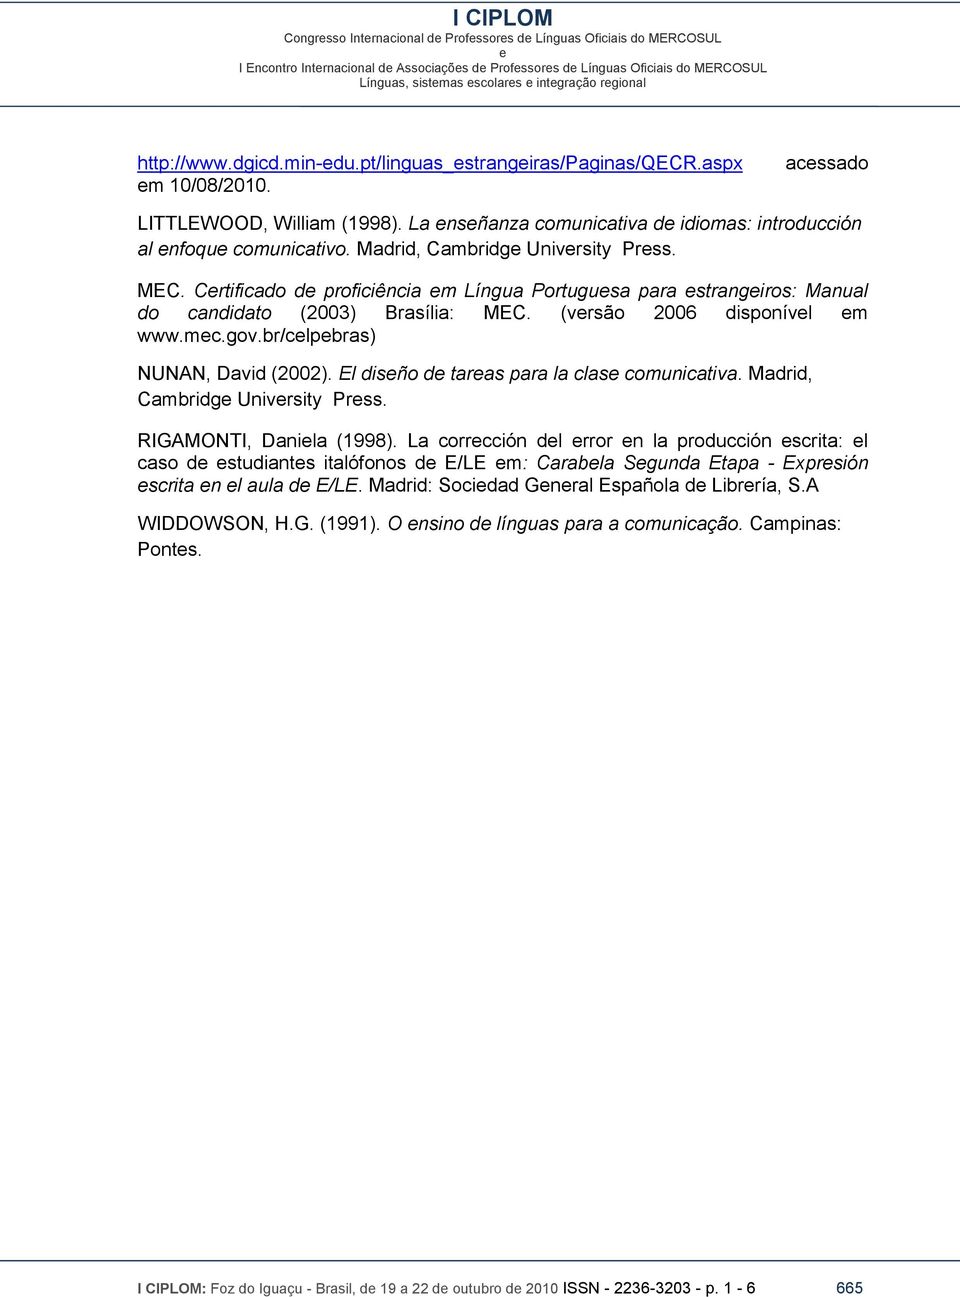 Crtificado d proficiência m Língua Portugusa para strangiros: Manual do candidato (2003) Brasília: MEC. (vrsão 2006 disponívl m www.mc.gov.br/clpbras) NUNAN, David (2002).